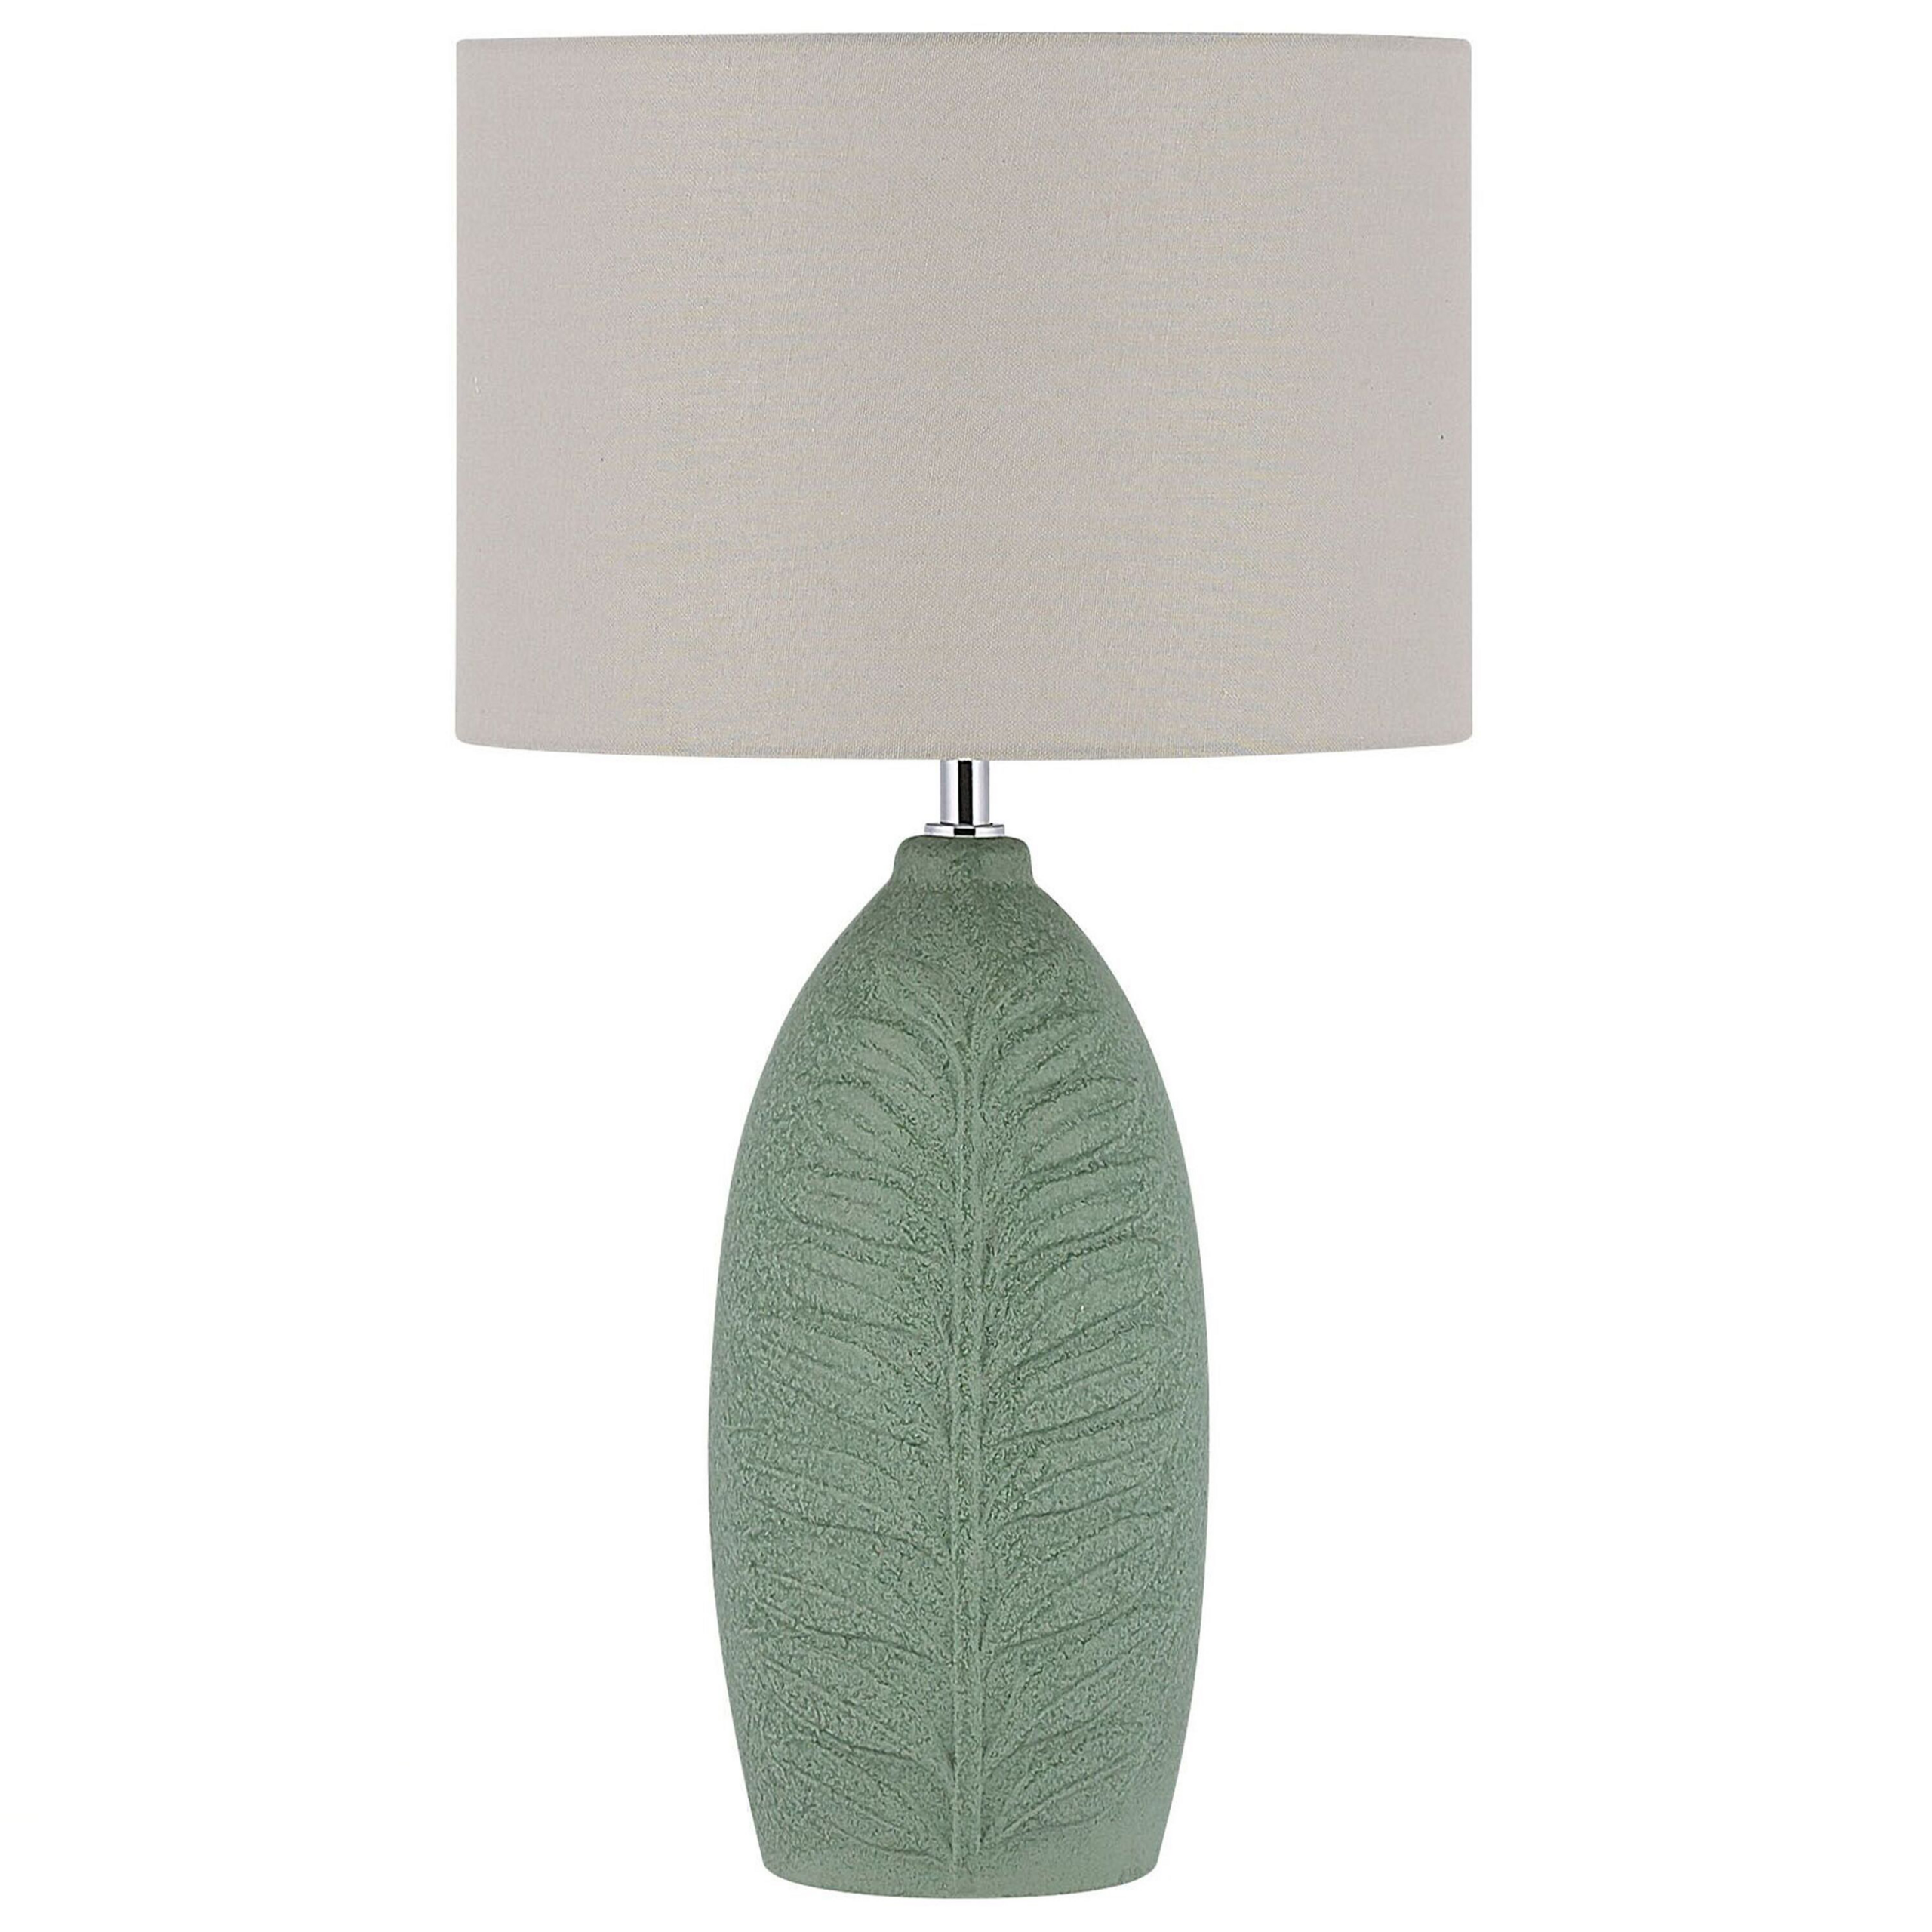 Beliani Bedside Table Lamp Green and Grey Ceramic 59 cm Leaf Pattern Modern Scandinavian